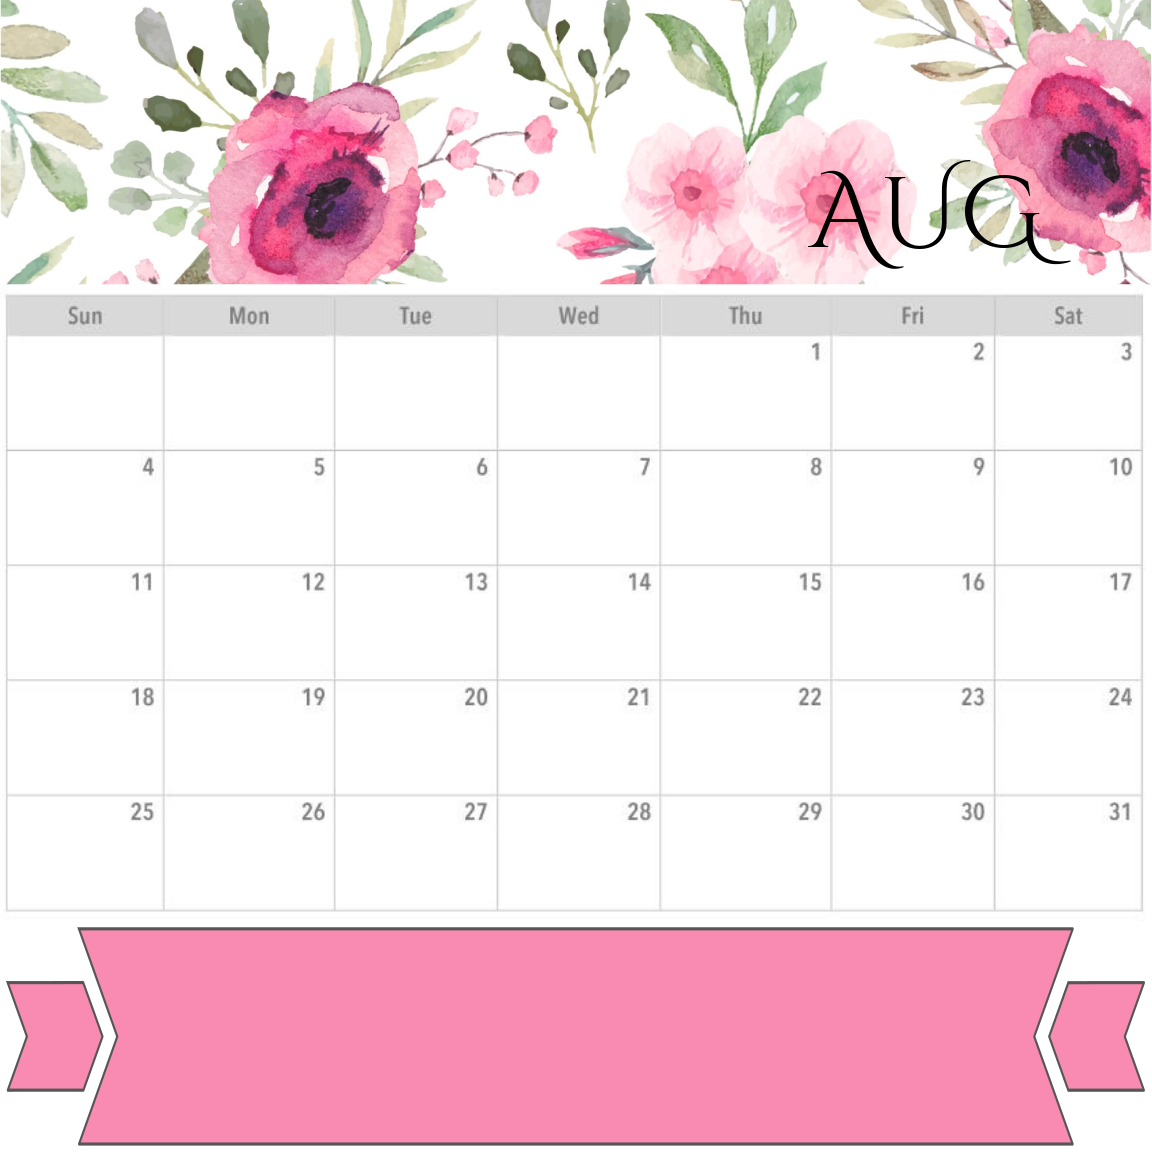 Printables - Planner - August 2019 Calendar Monthly Weekly